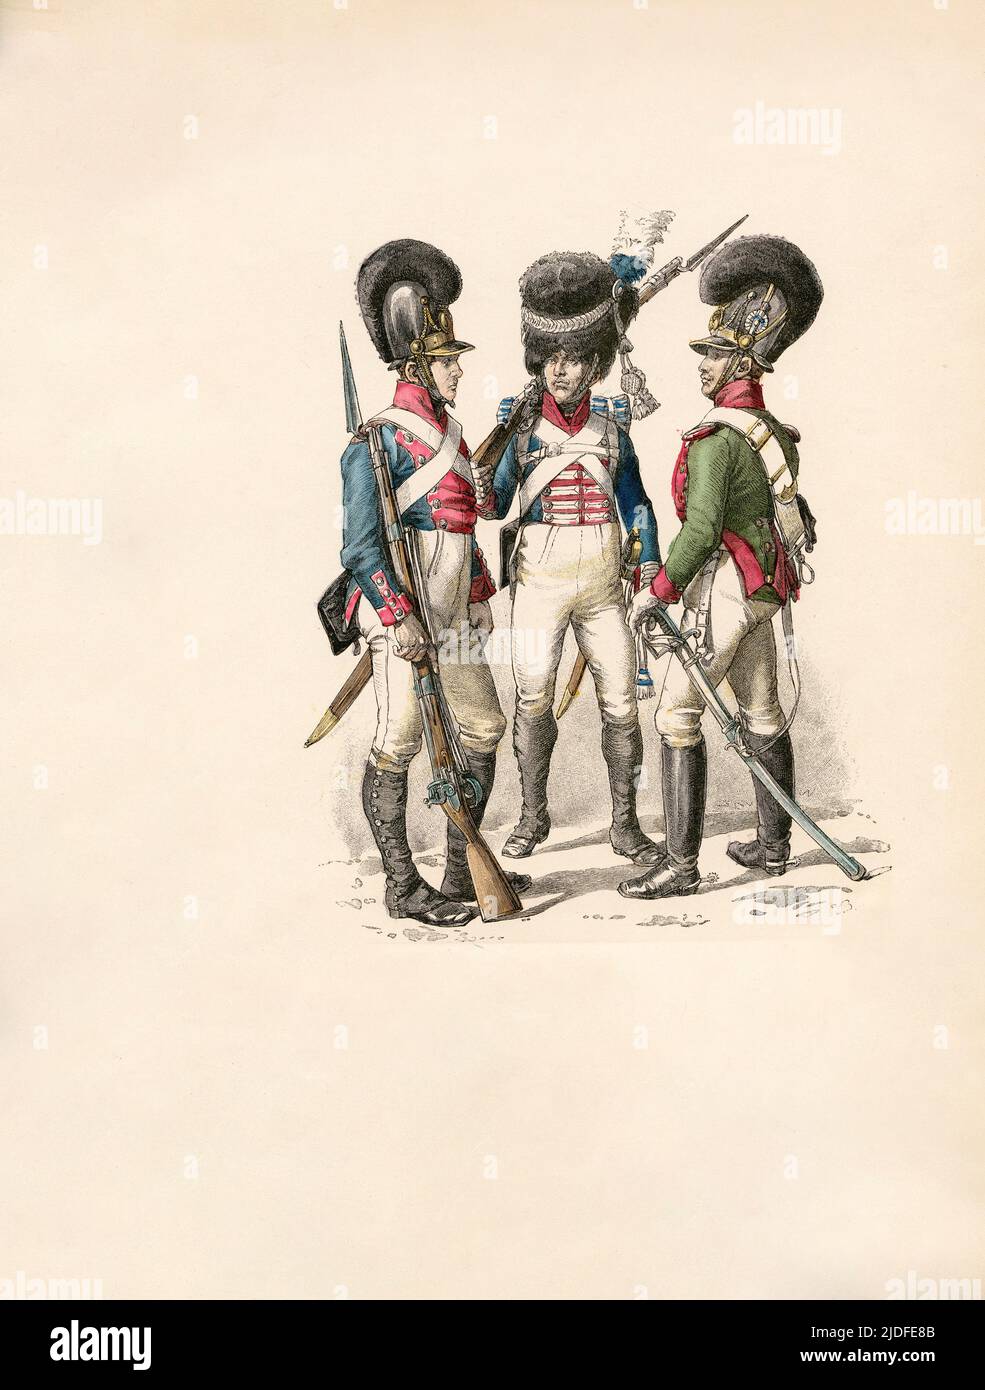 Bavarian Army, Infantryman 1814-1825, Grenadier of the Guard 1812-1815, Light Cavalryman 1805-1812, Illustration, The History of Costume, Braun & Schneider, Munich, Germany, 1861-1880 Stock Photo